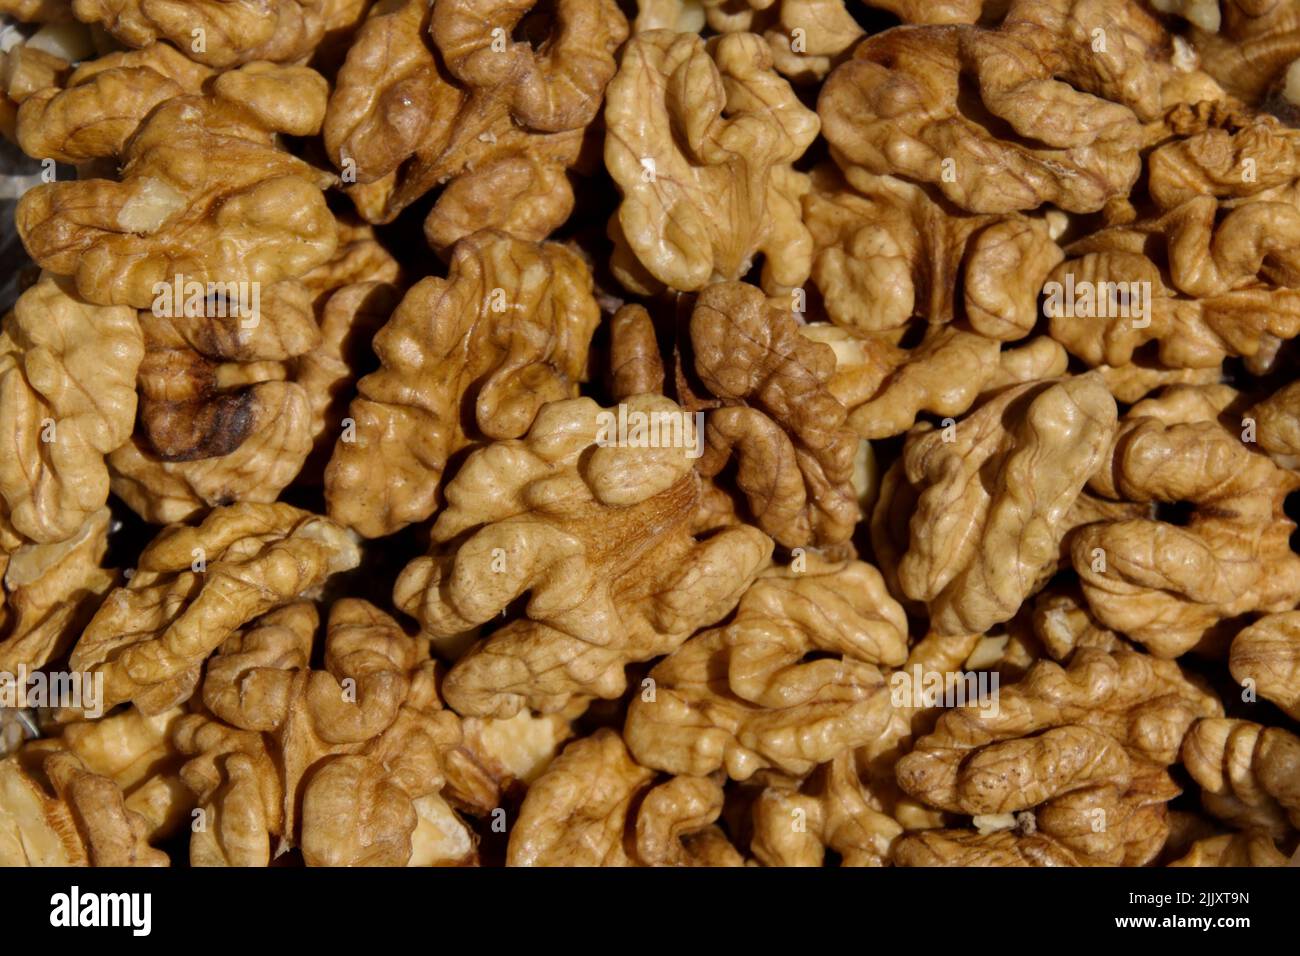 Background of many nuts from crushed walnut kernels, Sofia, Bulgaria Stock Photo